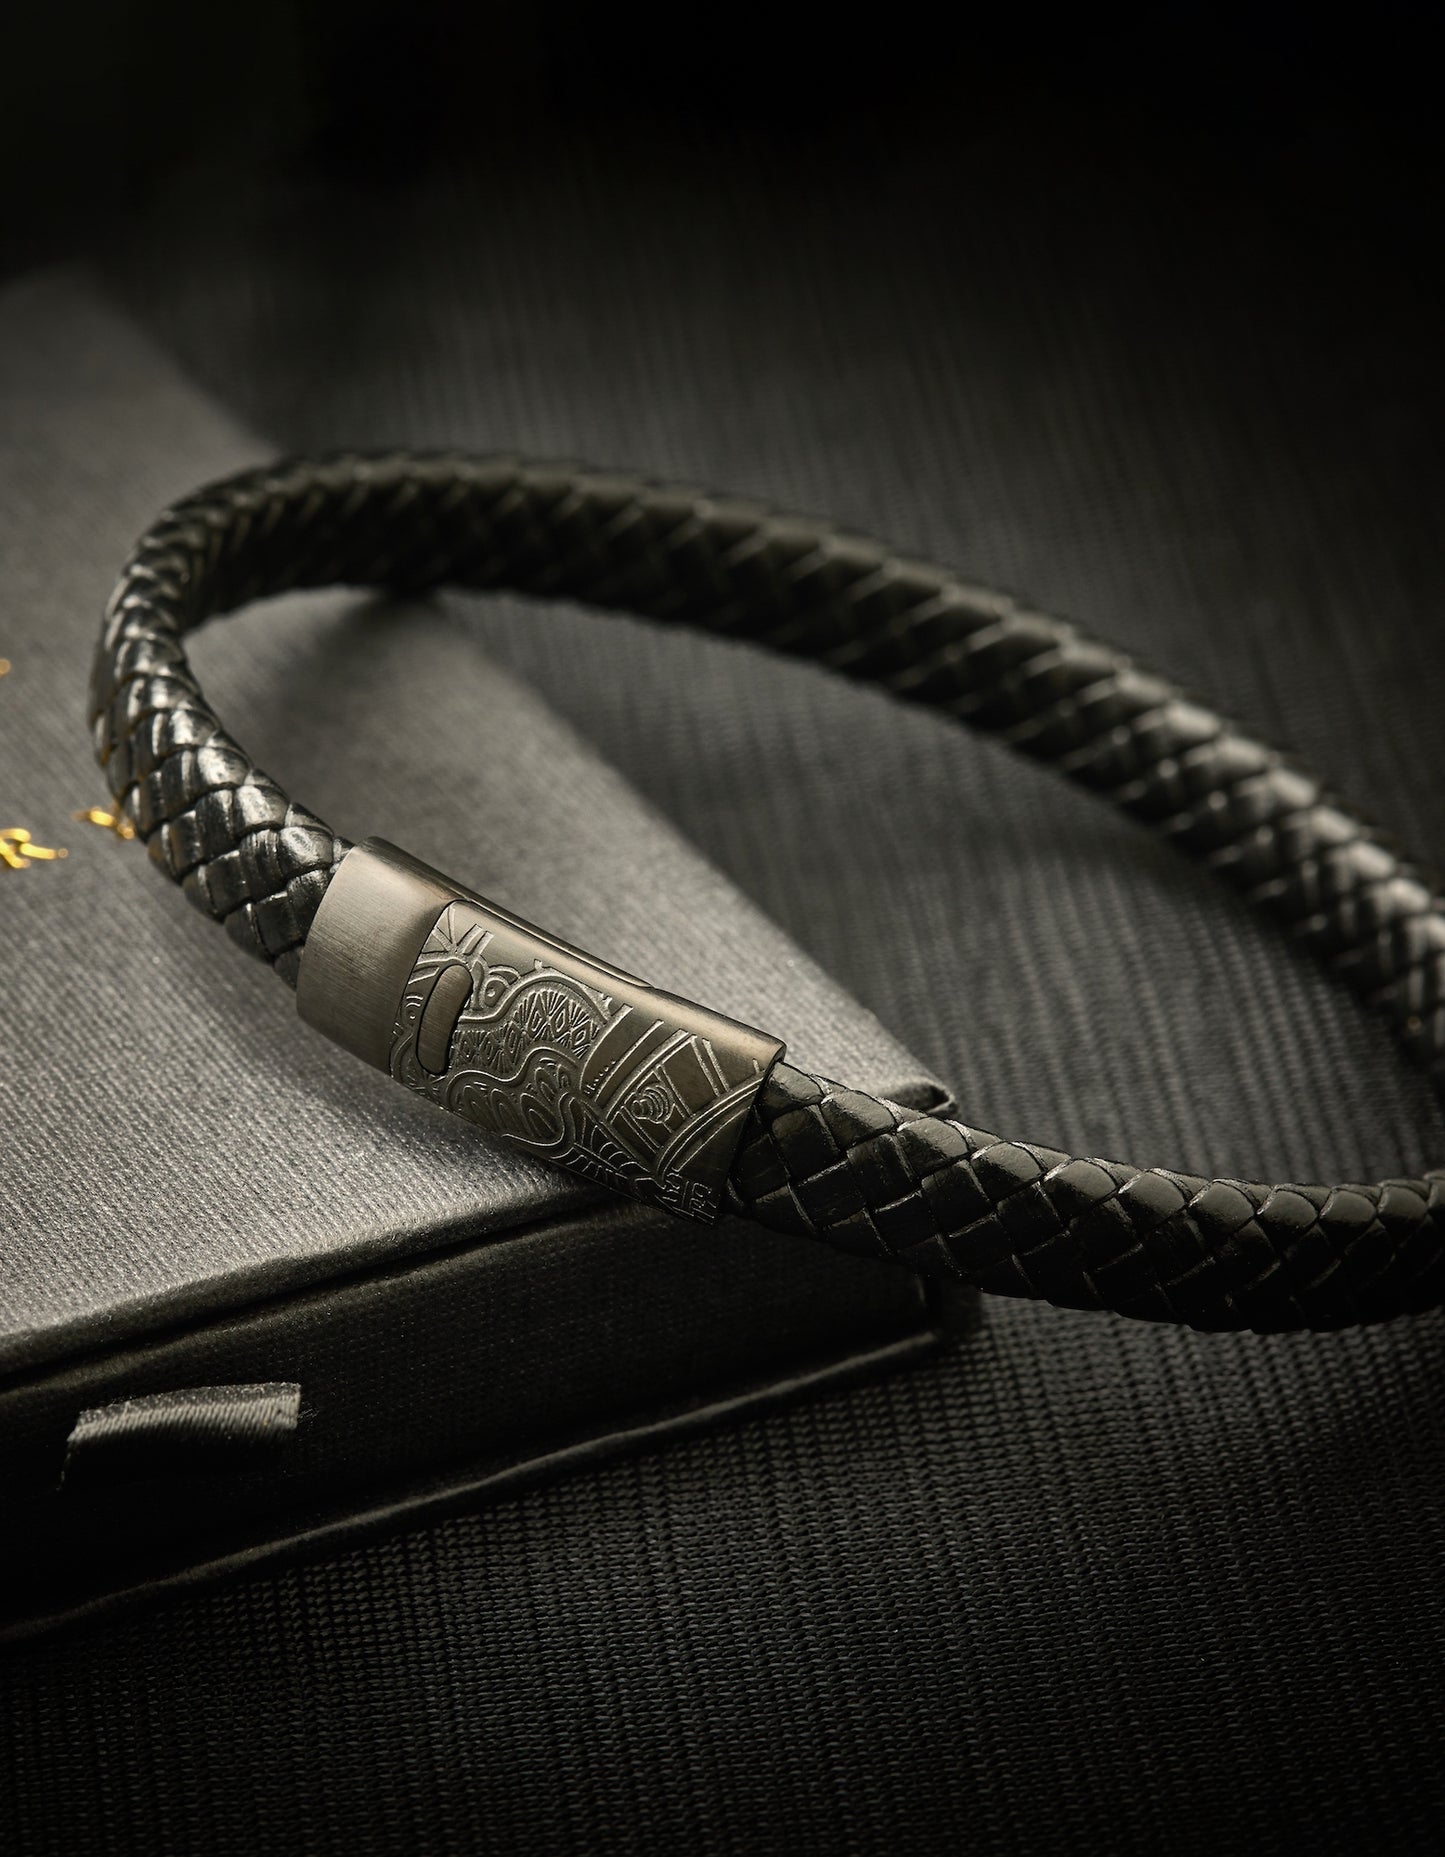 Leather Bracelet "HANOVER"